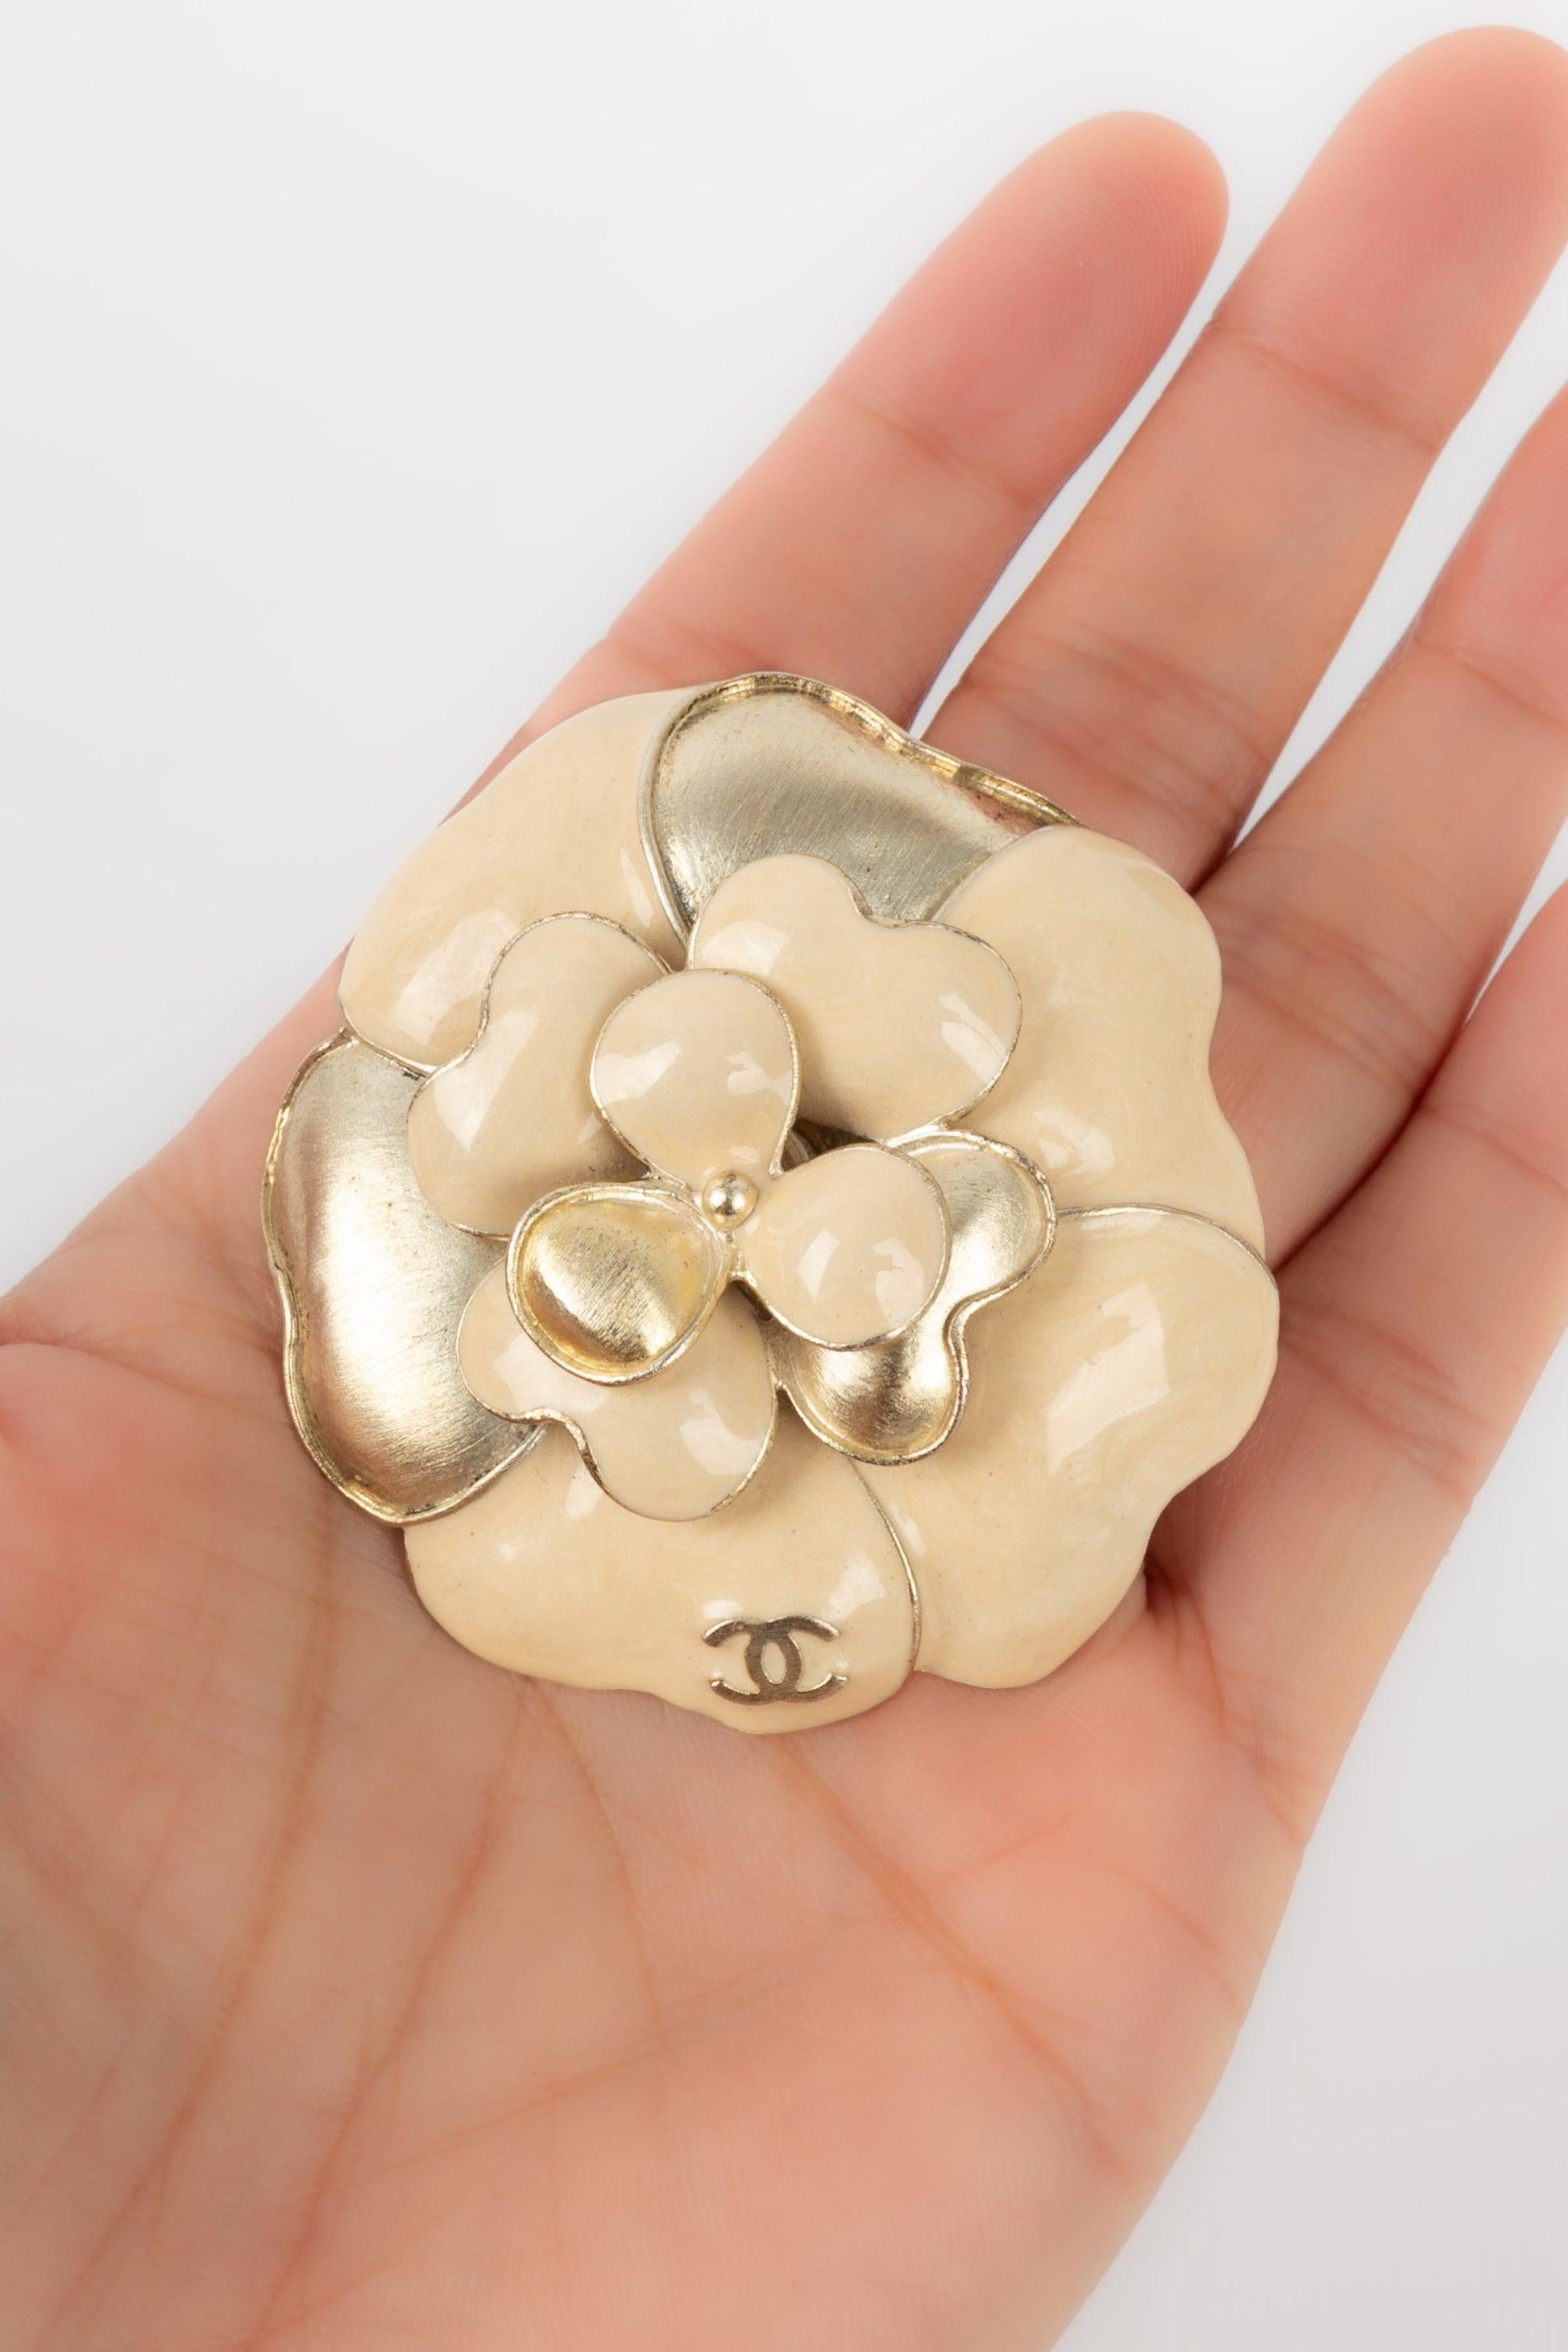 Chanel Camellia Pendant Brooch in Golden Metal and Beige Enamel, 2007 For Sale 2